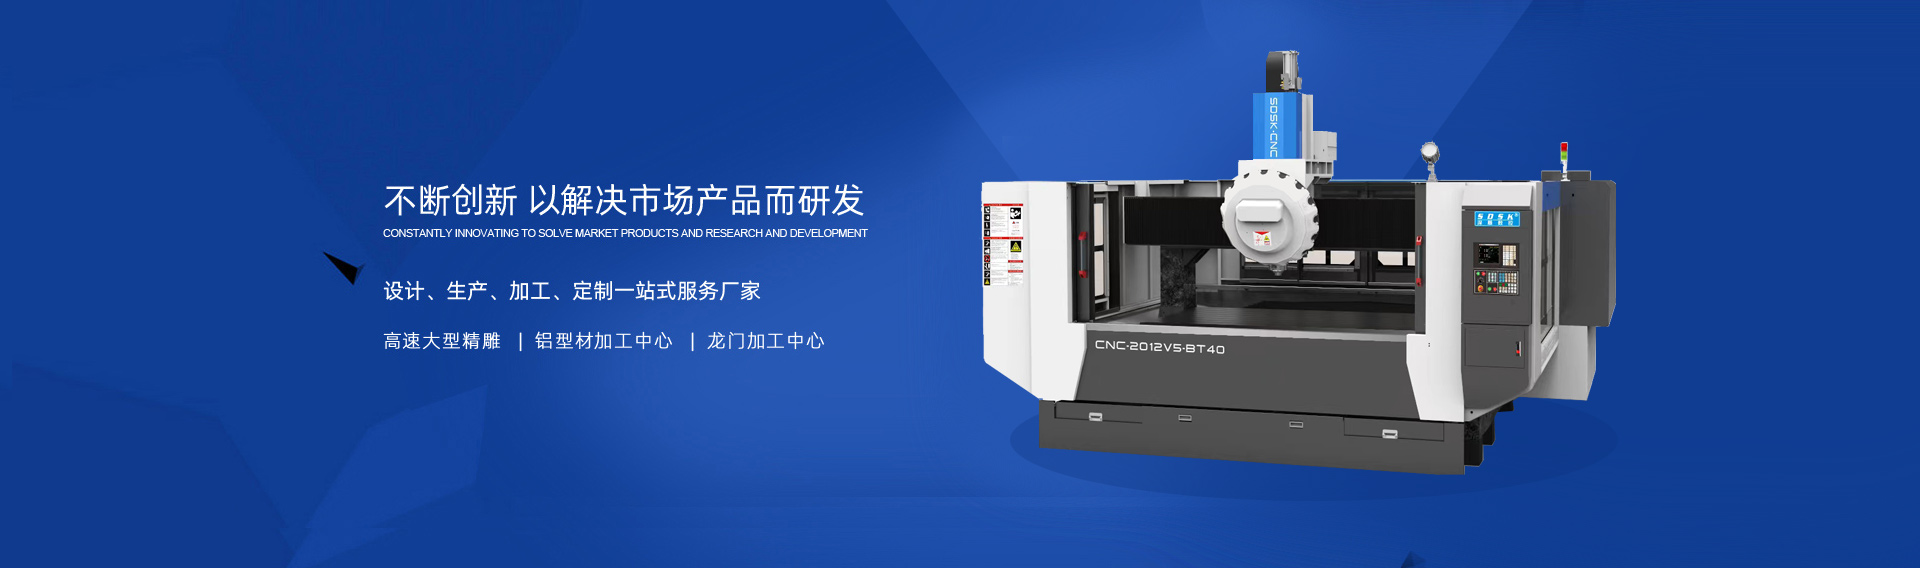 Introduction to High end CNC Equipment and CNC Processing Technology - Shenzhen Jingdiao CNC Equipme